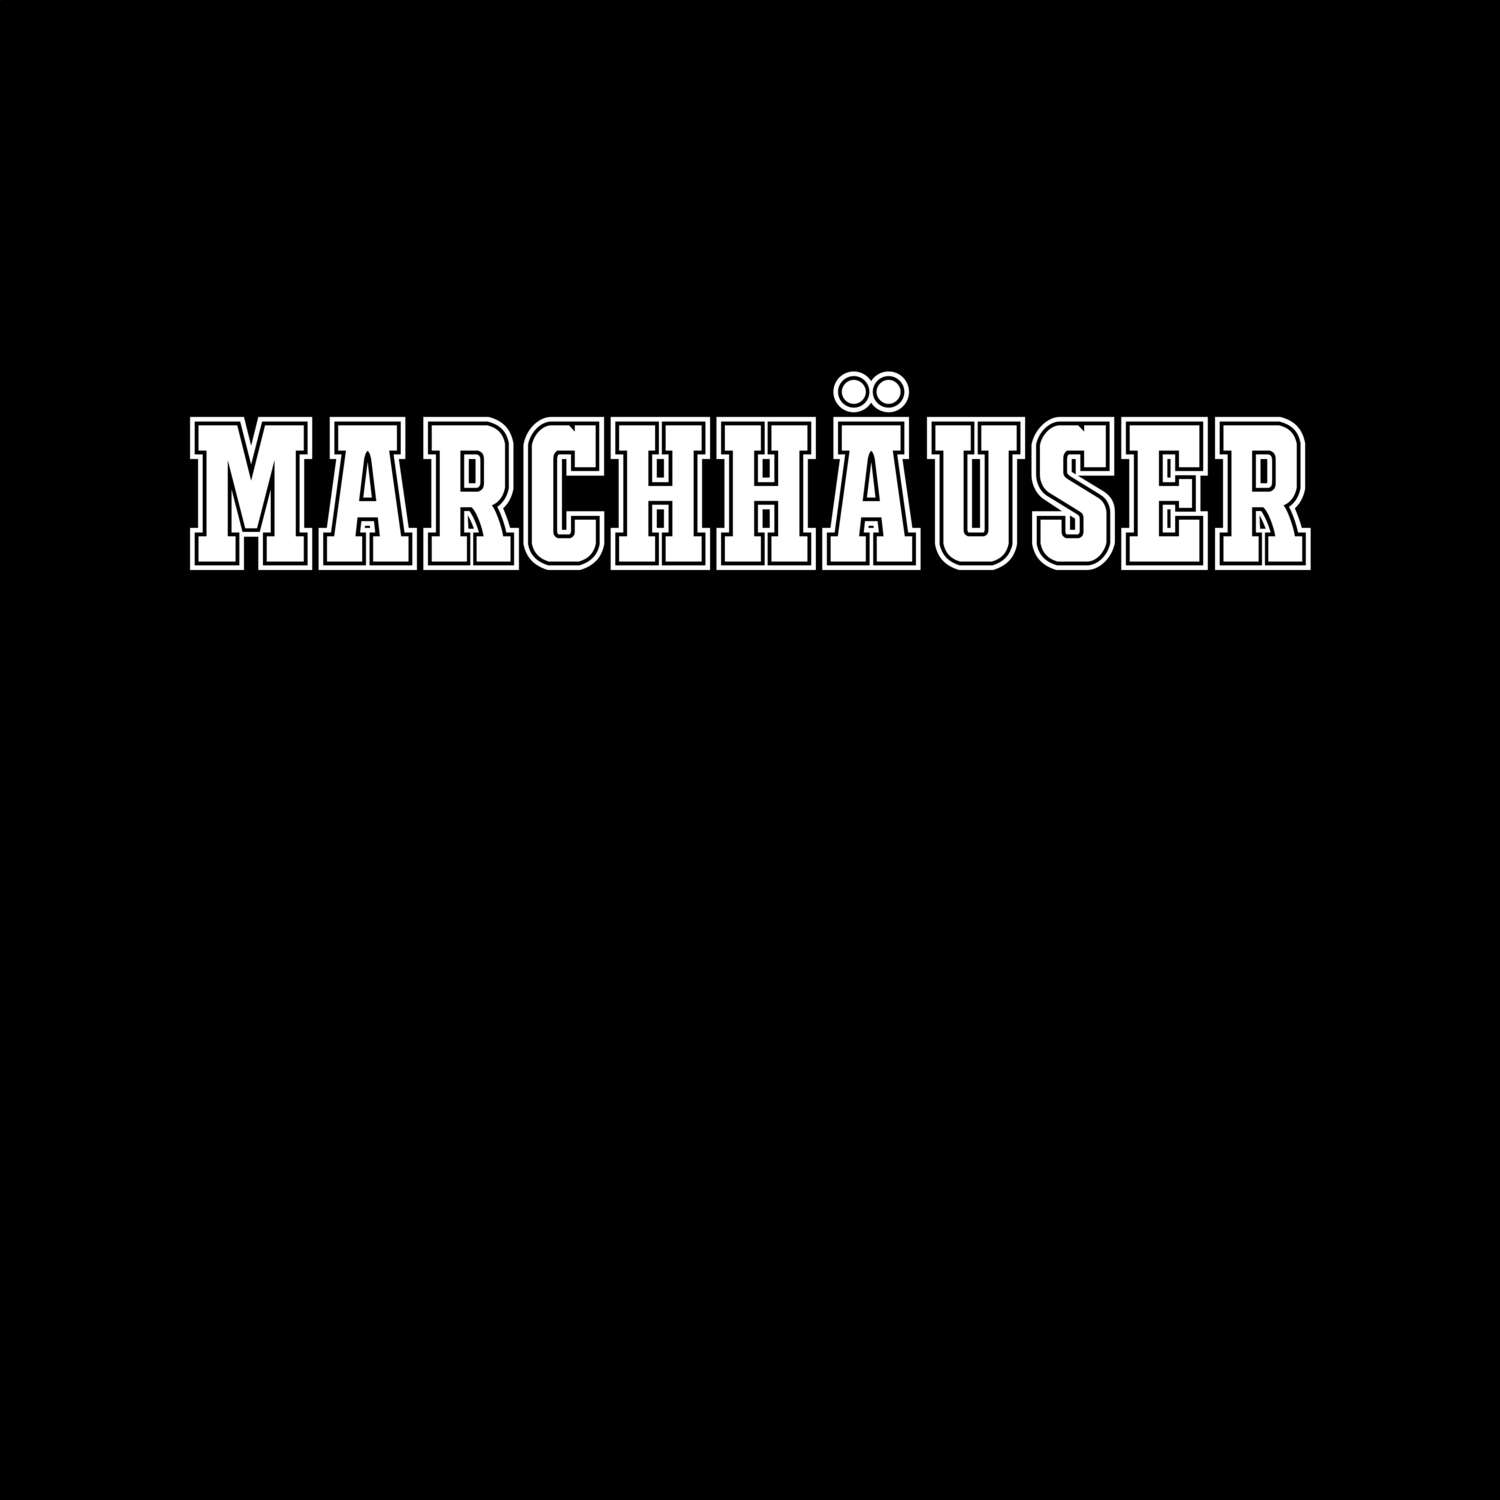 Marchhäuser T-Shirt »Classic«